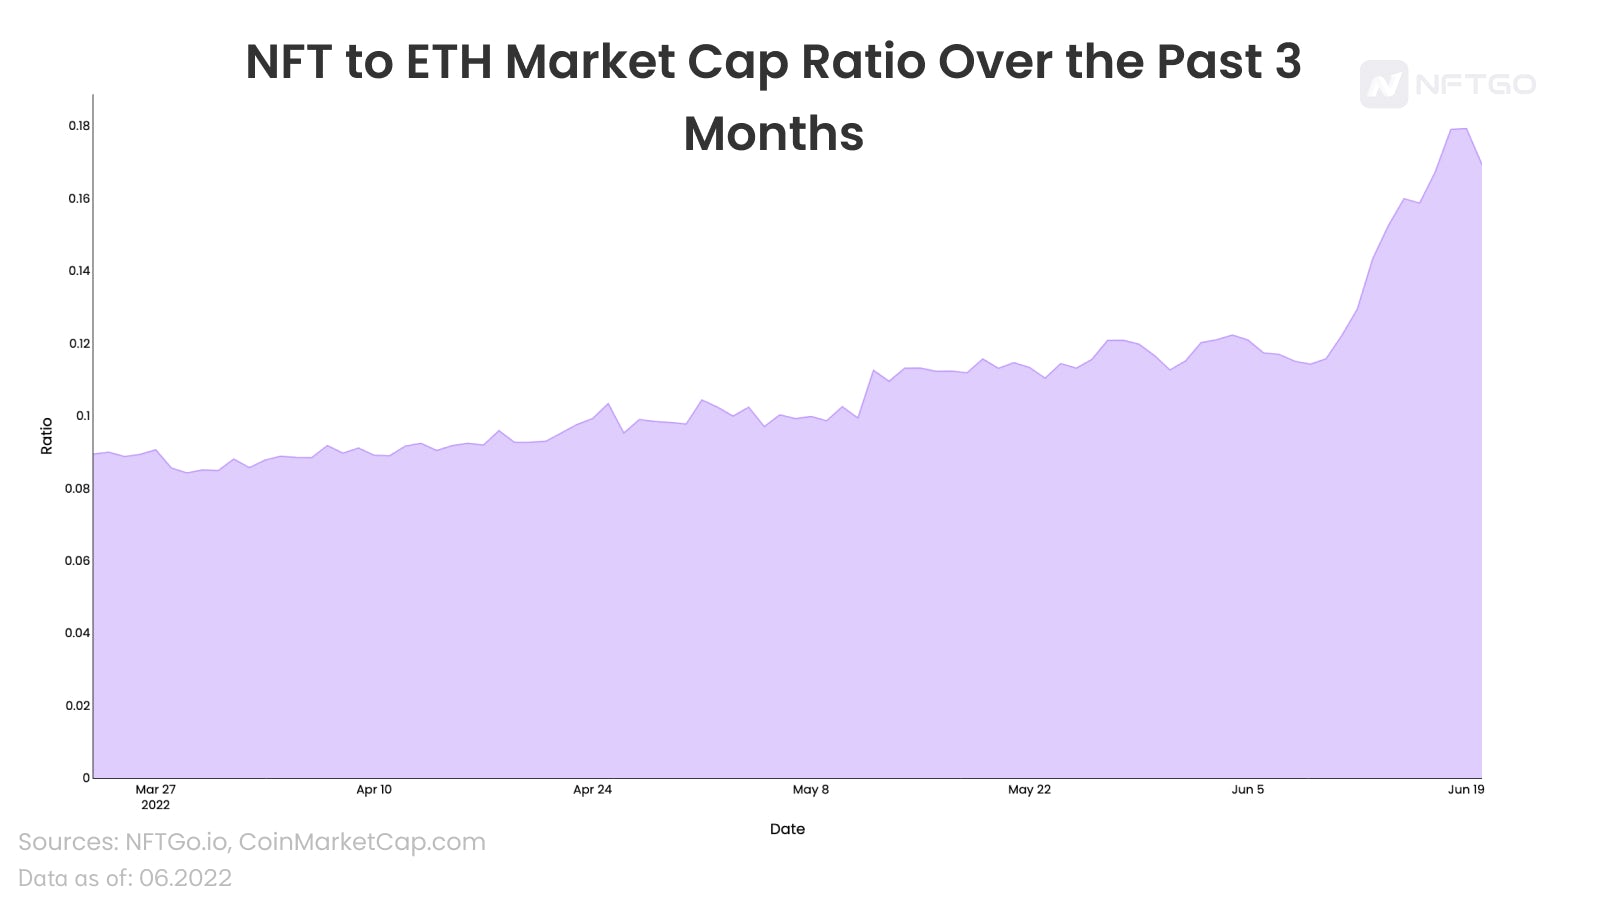 NFT to ETH Market Cap Ratio Over the Past 3 Months